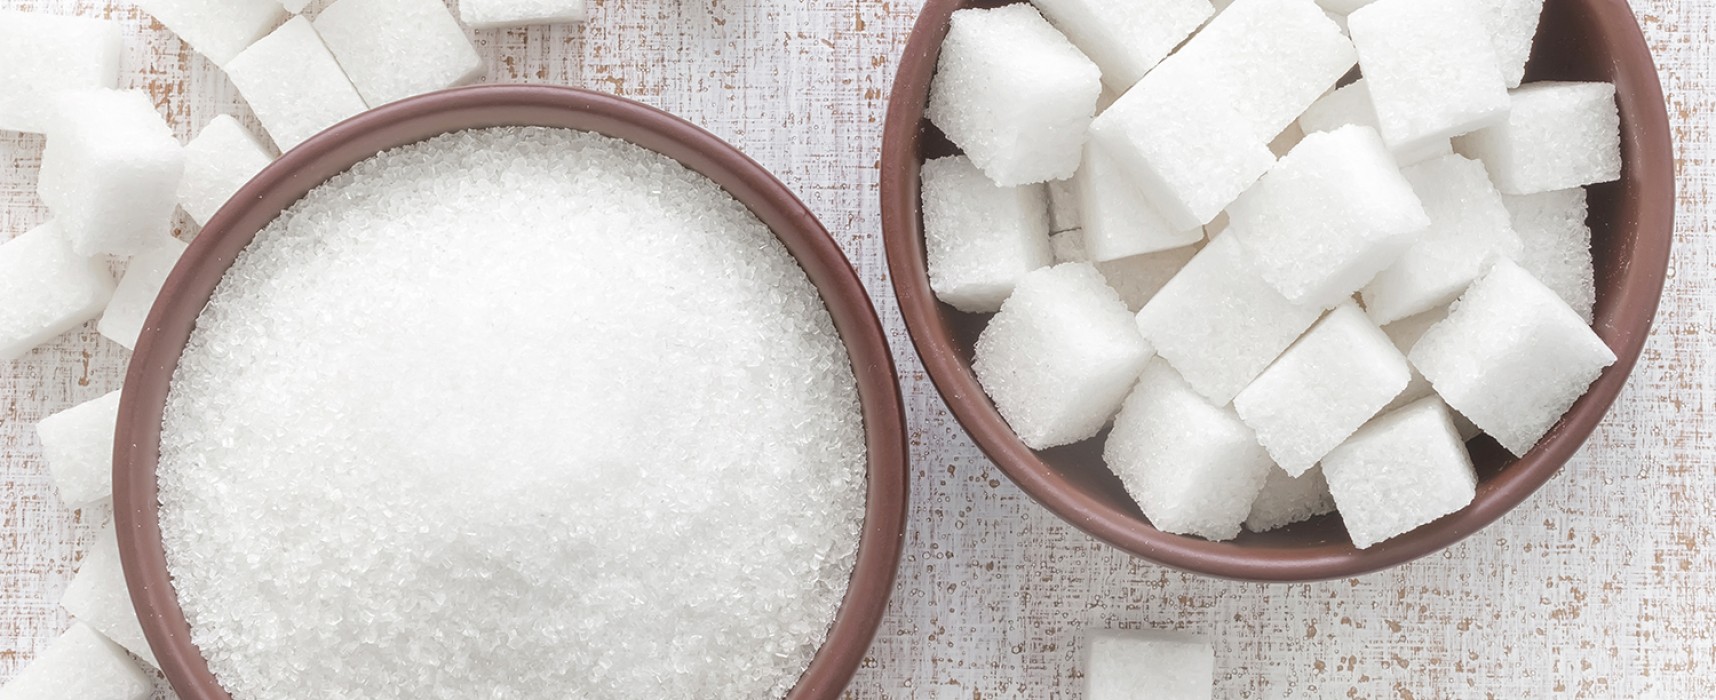 Consumo de açúcar aumenta no Brasil